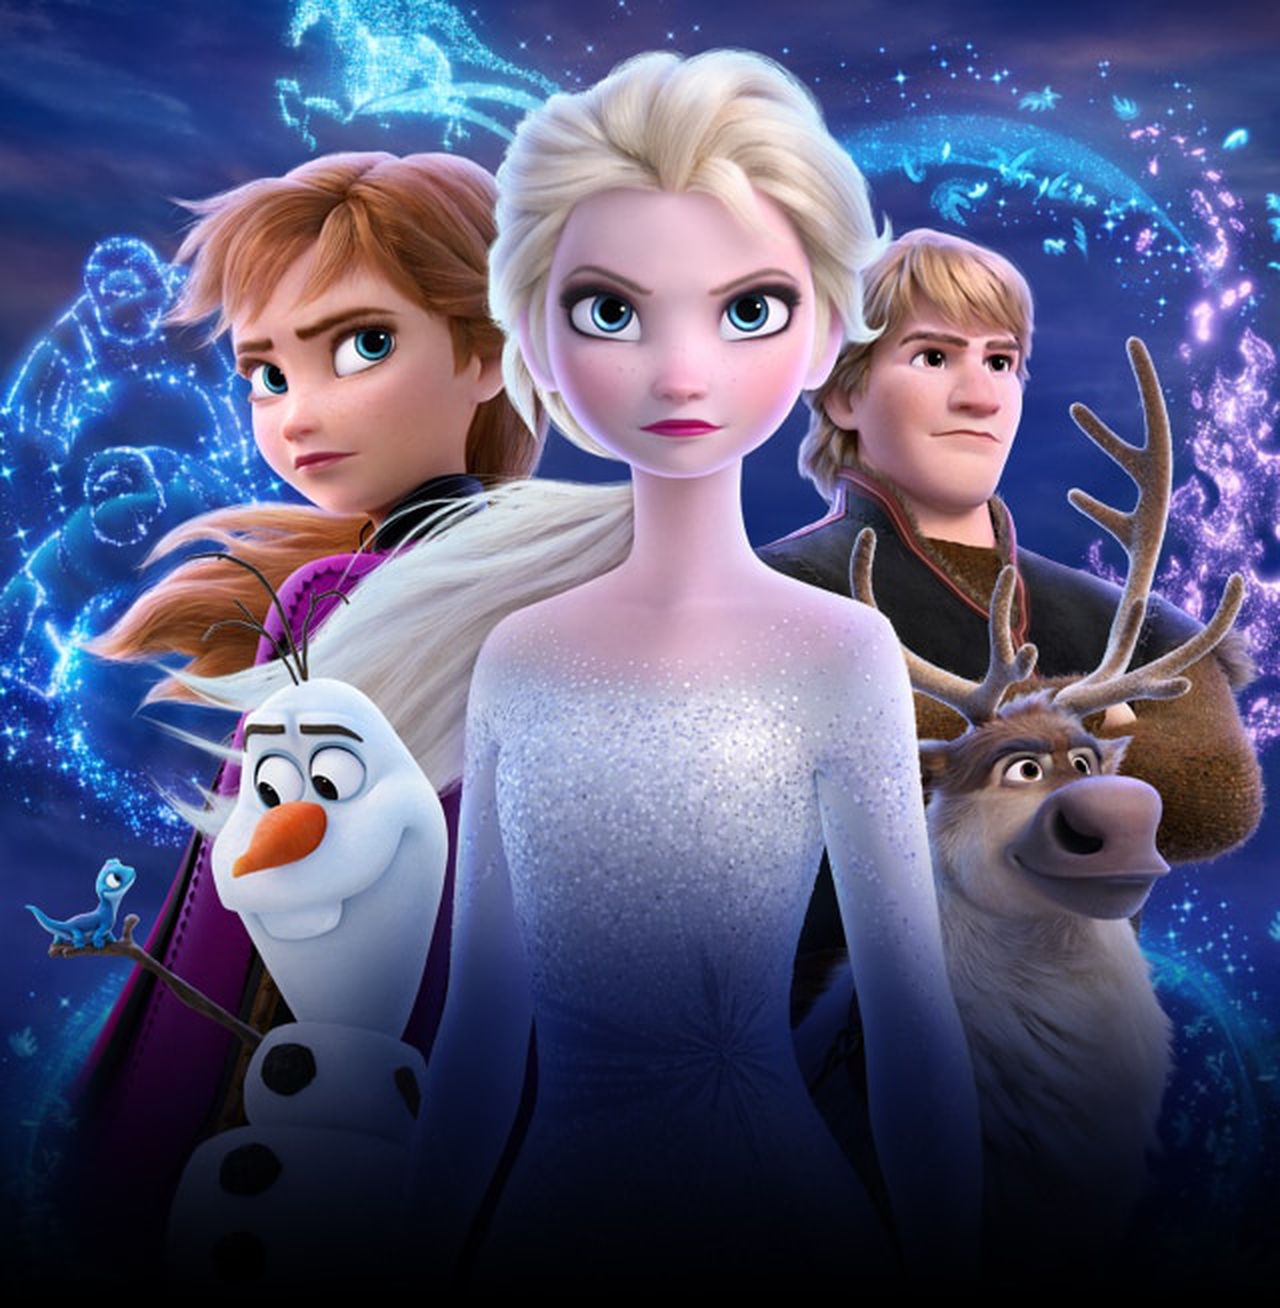 Frozen 2 opened to $350 million worldwide, image via Disney